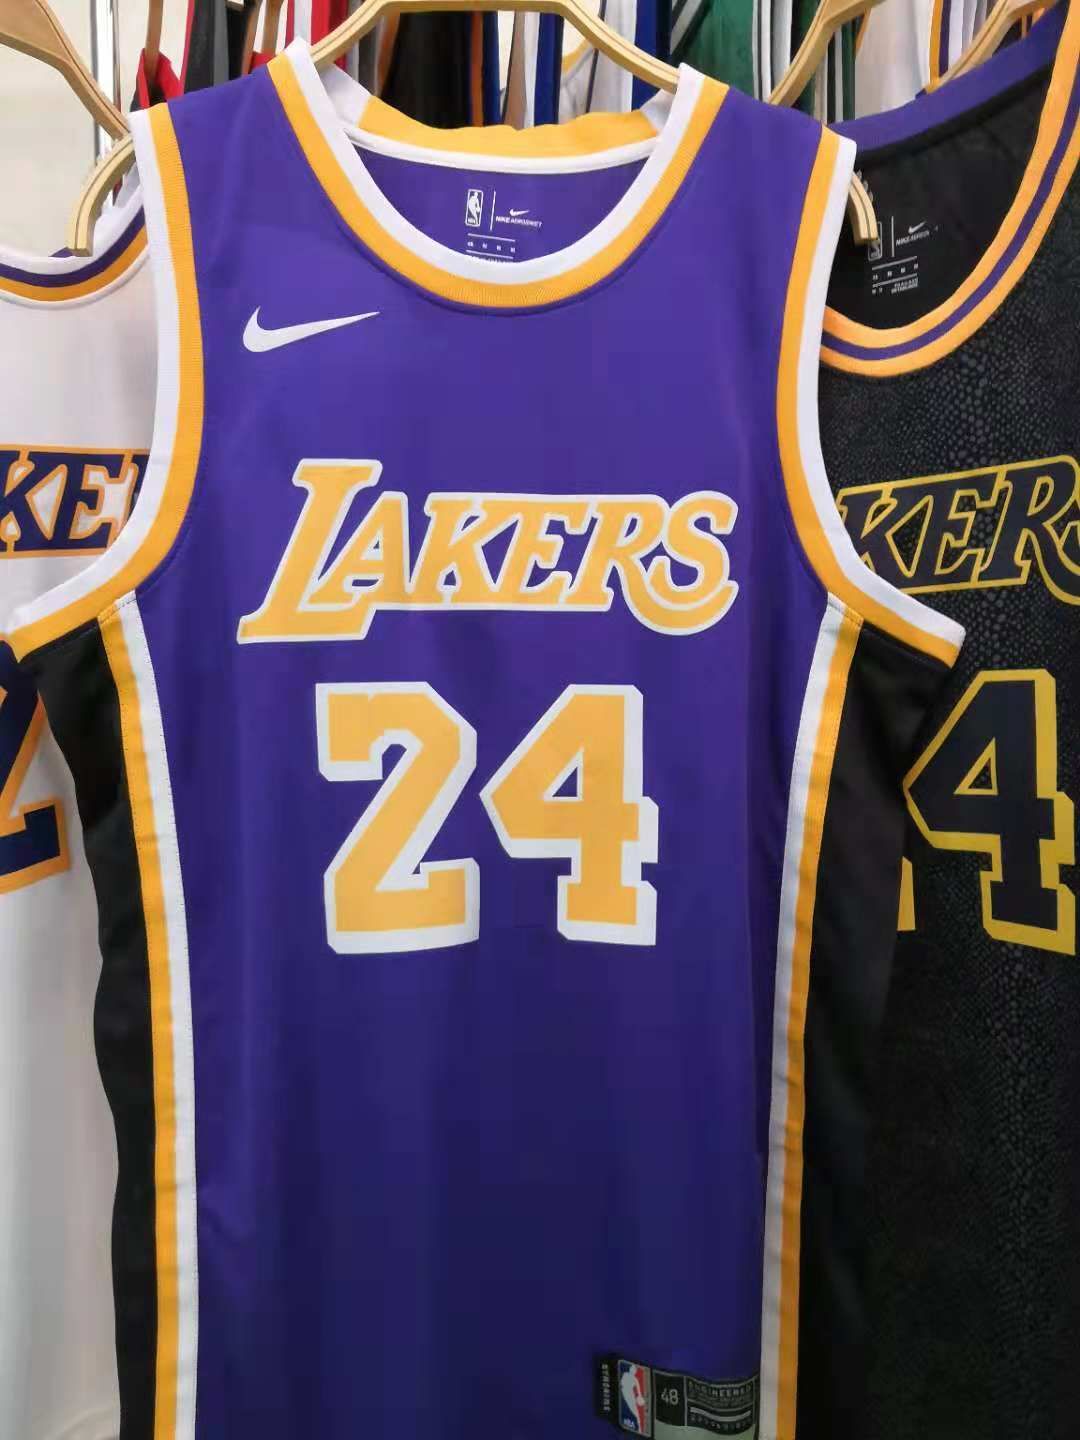 lakers jersey 2020 purple